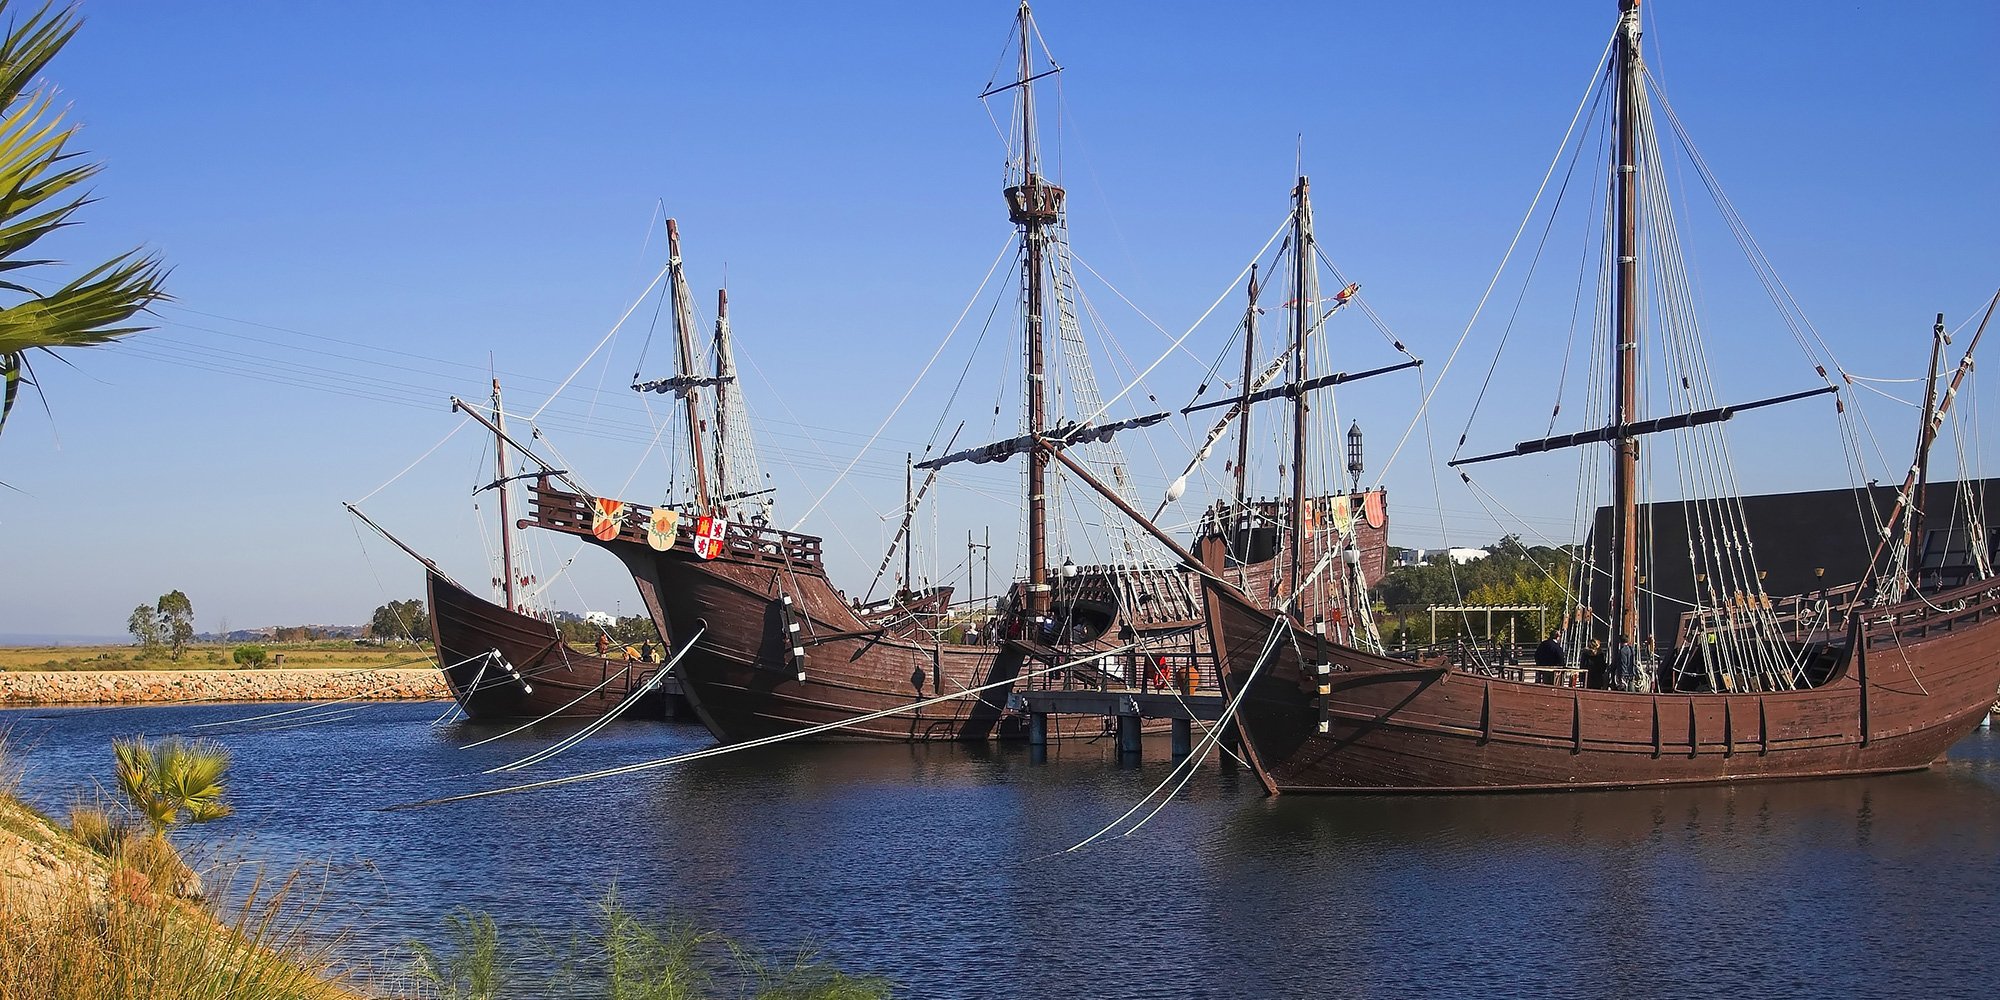 Christopher Columbus' ships